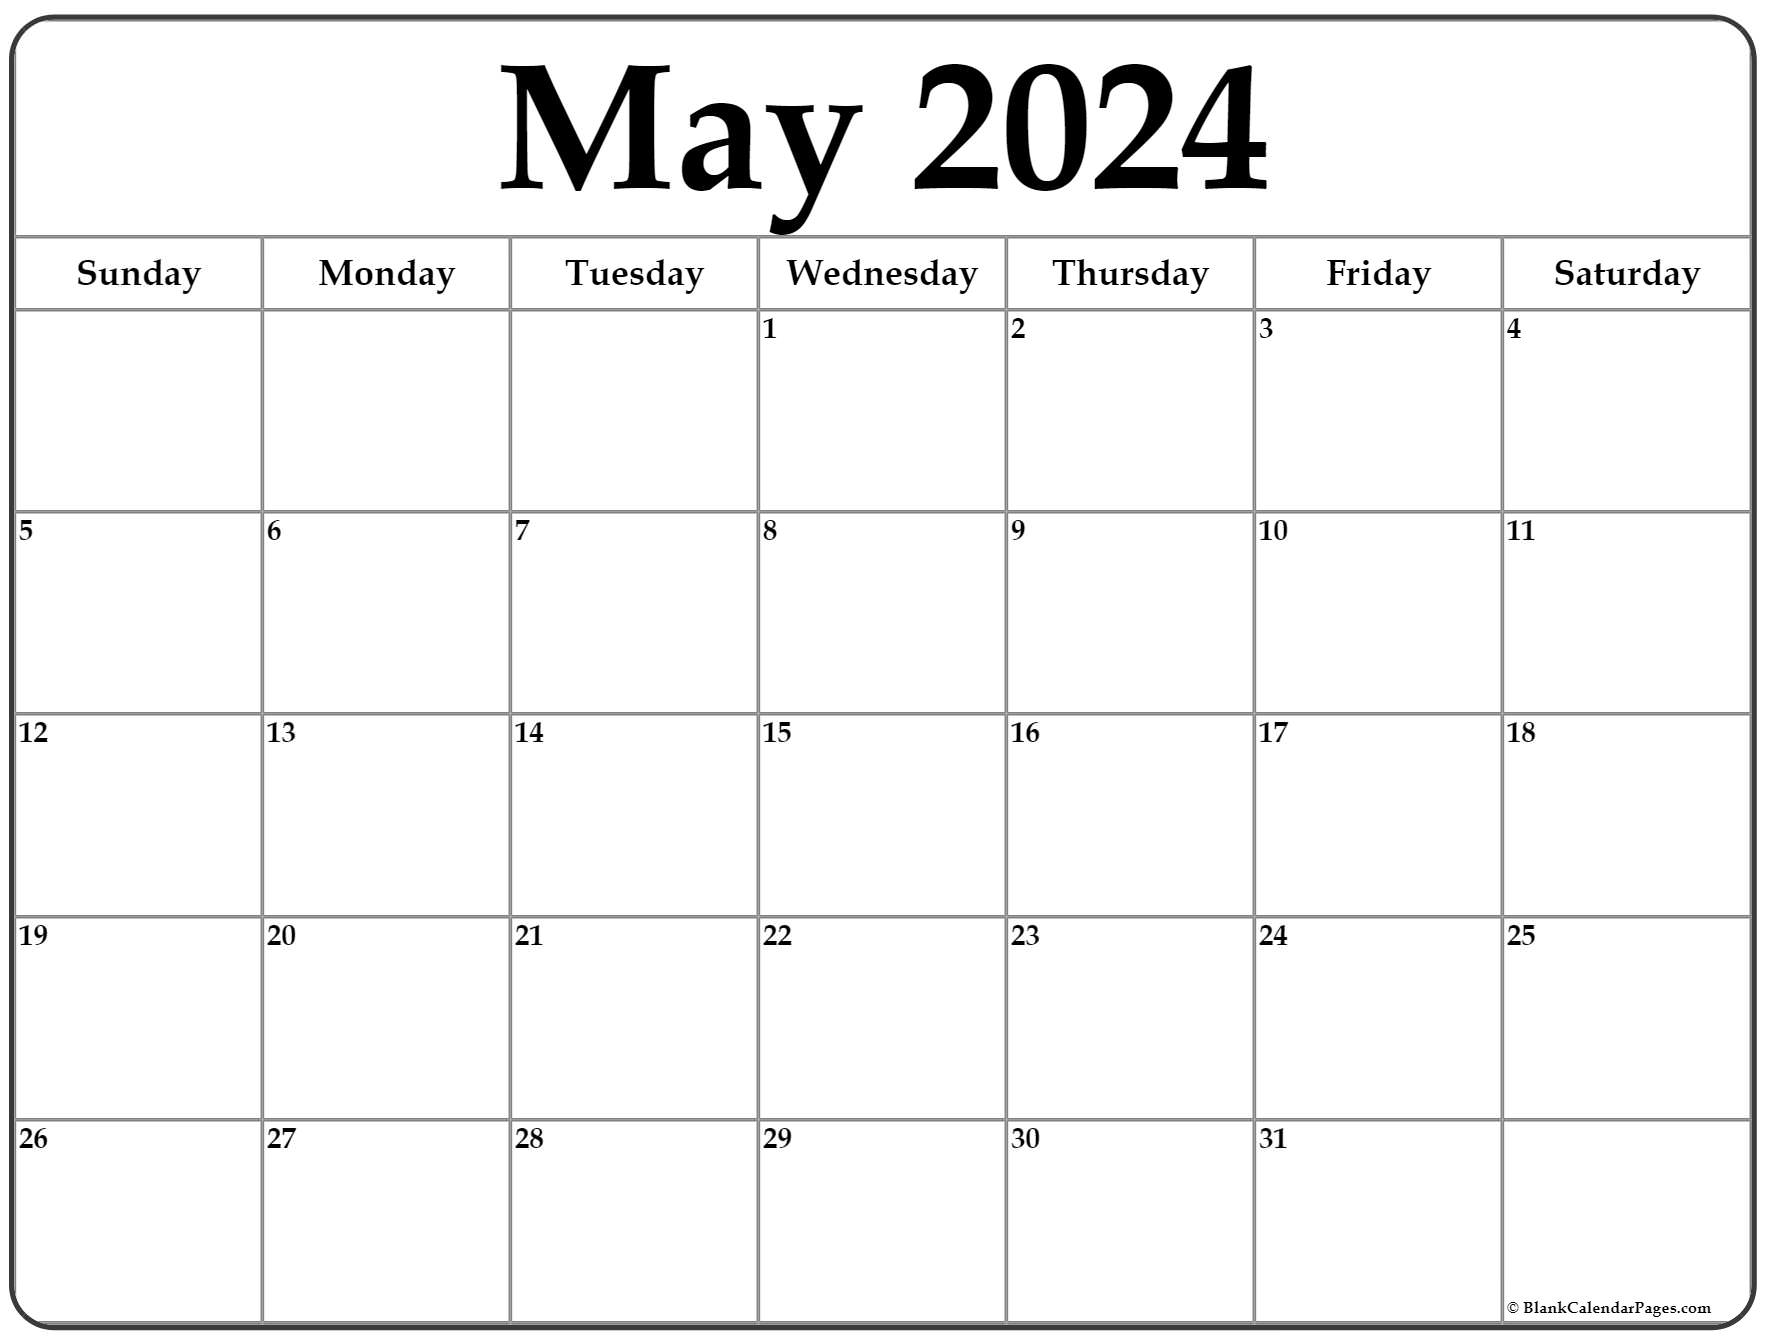 Print Calendar May 2022 May 2022 Calendar | Free Printable Calendar Templates